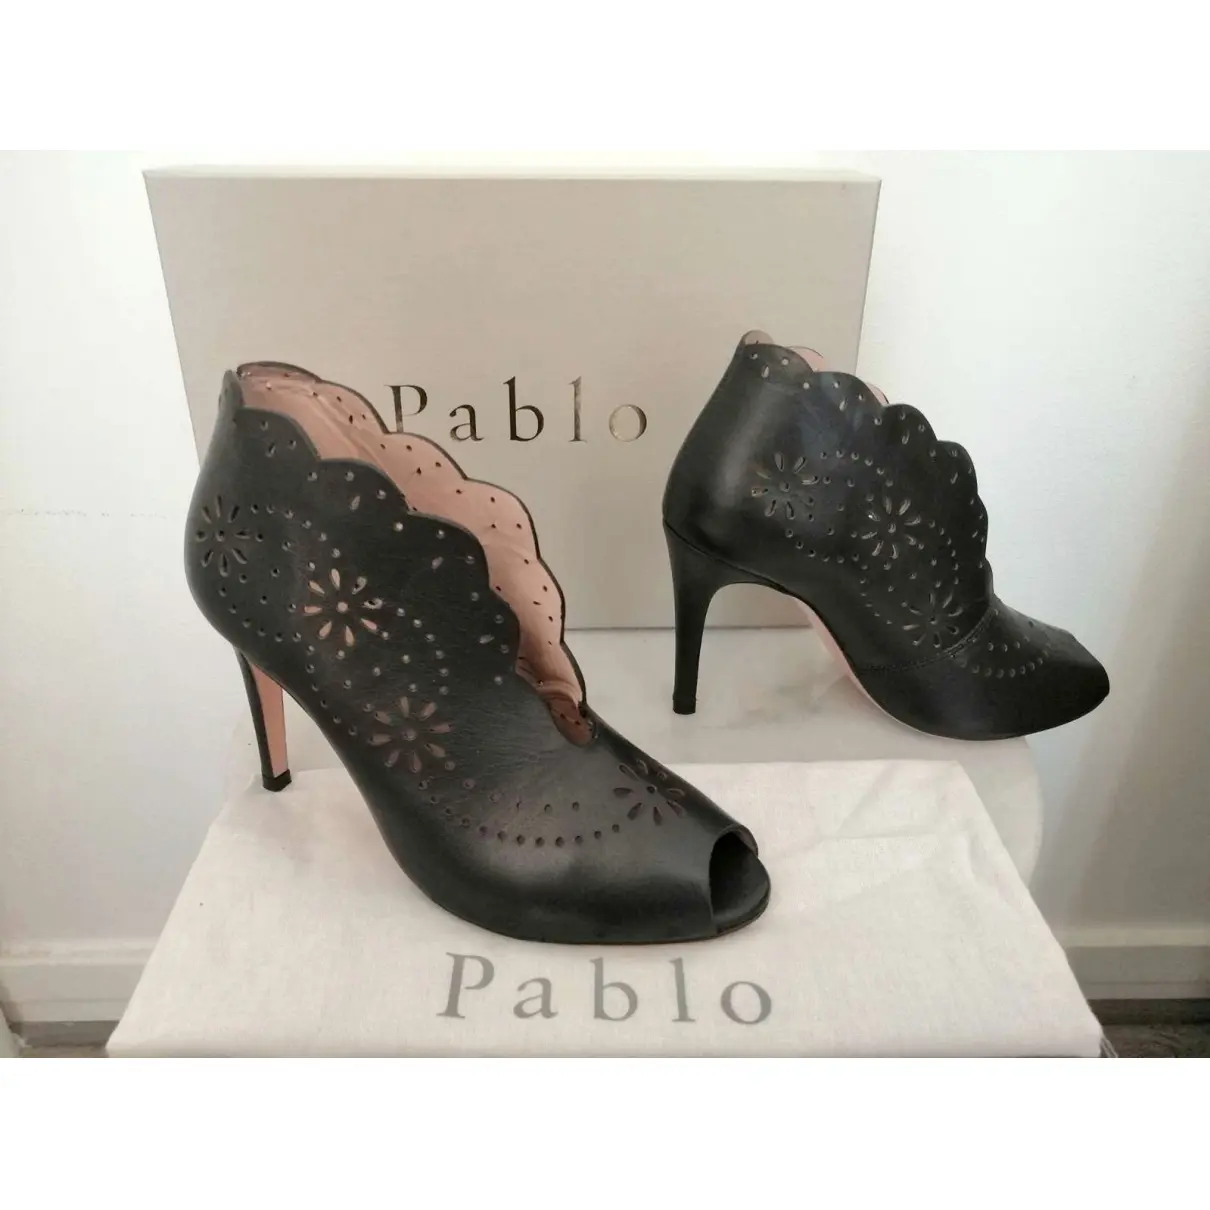 Buy Pablo Leather heels online